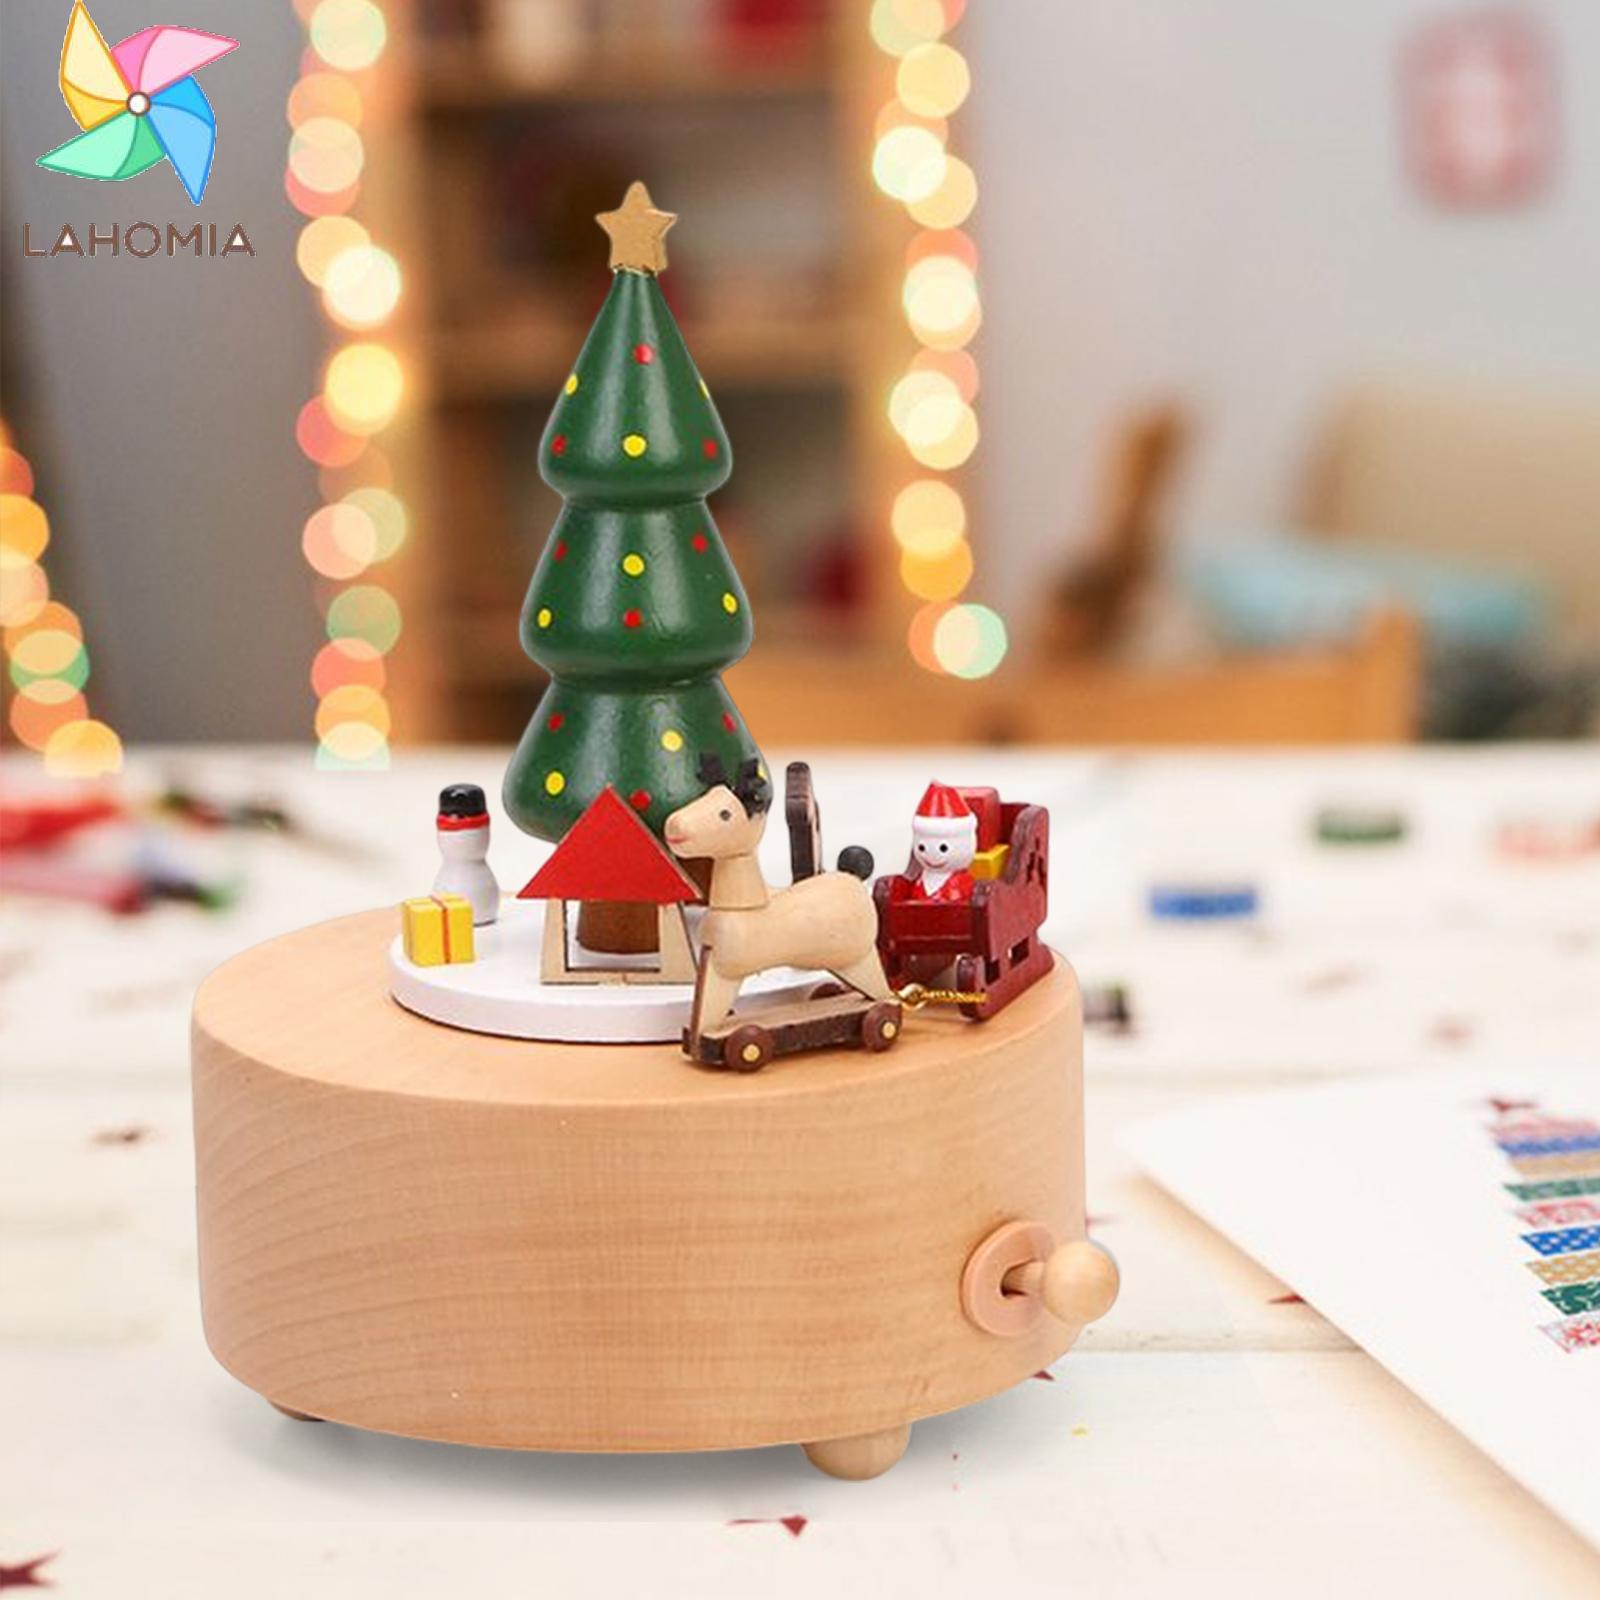 lahomia Portable Christmas Music Box Rotatable Musical Box Carousel Crafts